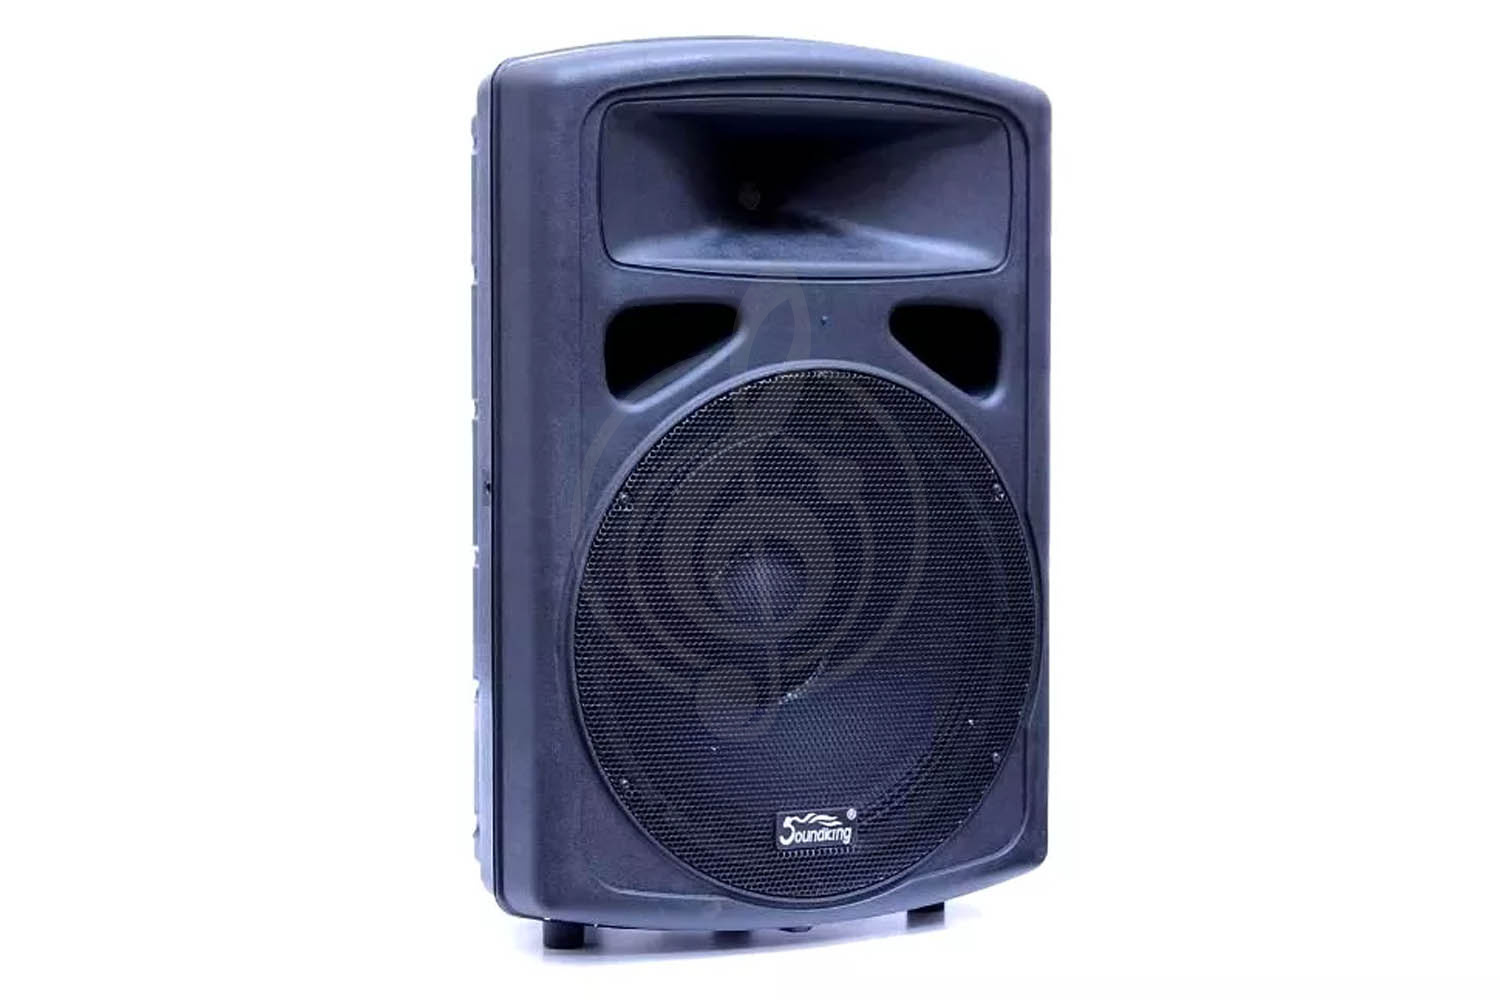 Активная акустическая система Активные акустические системы Soundking Soundking FP0212A - активная акустическая система, 200Вт FP0212A - фото 1